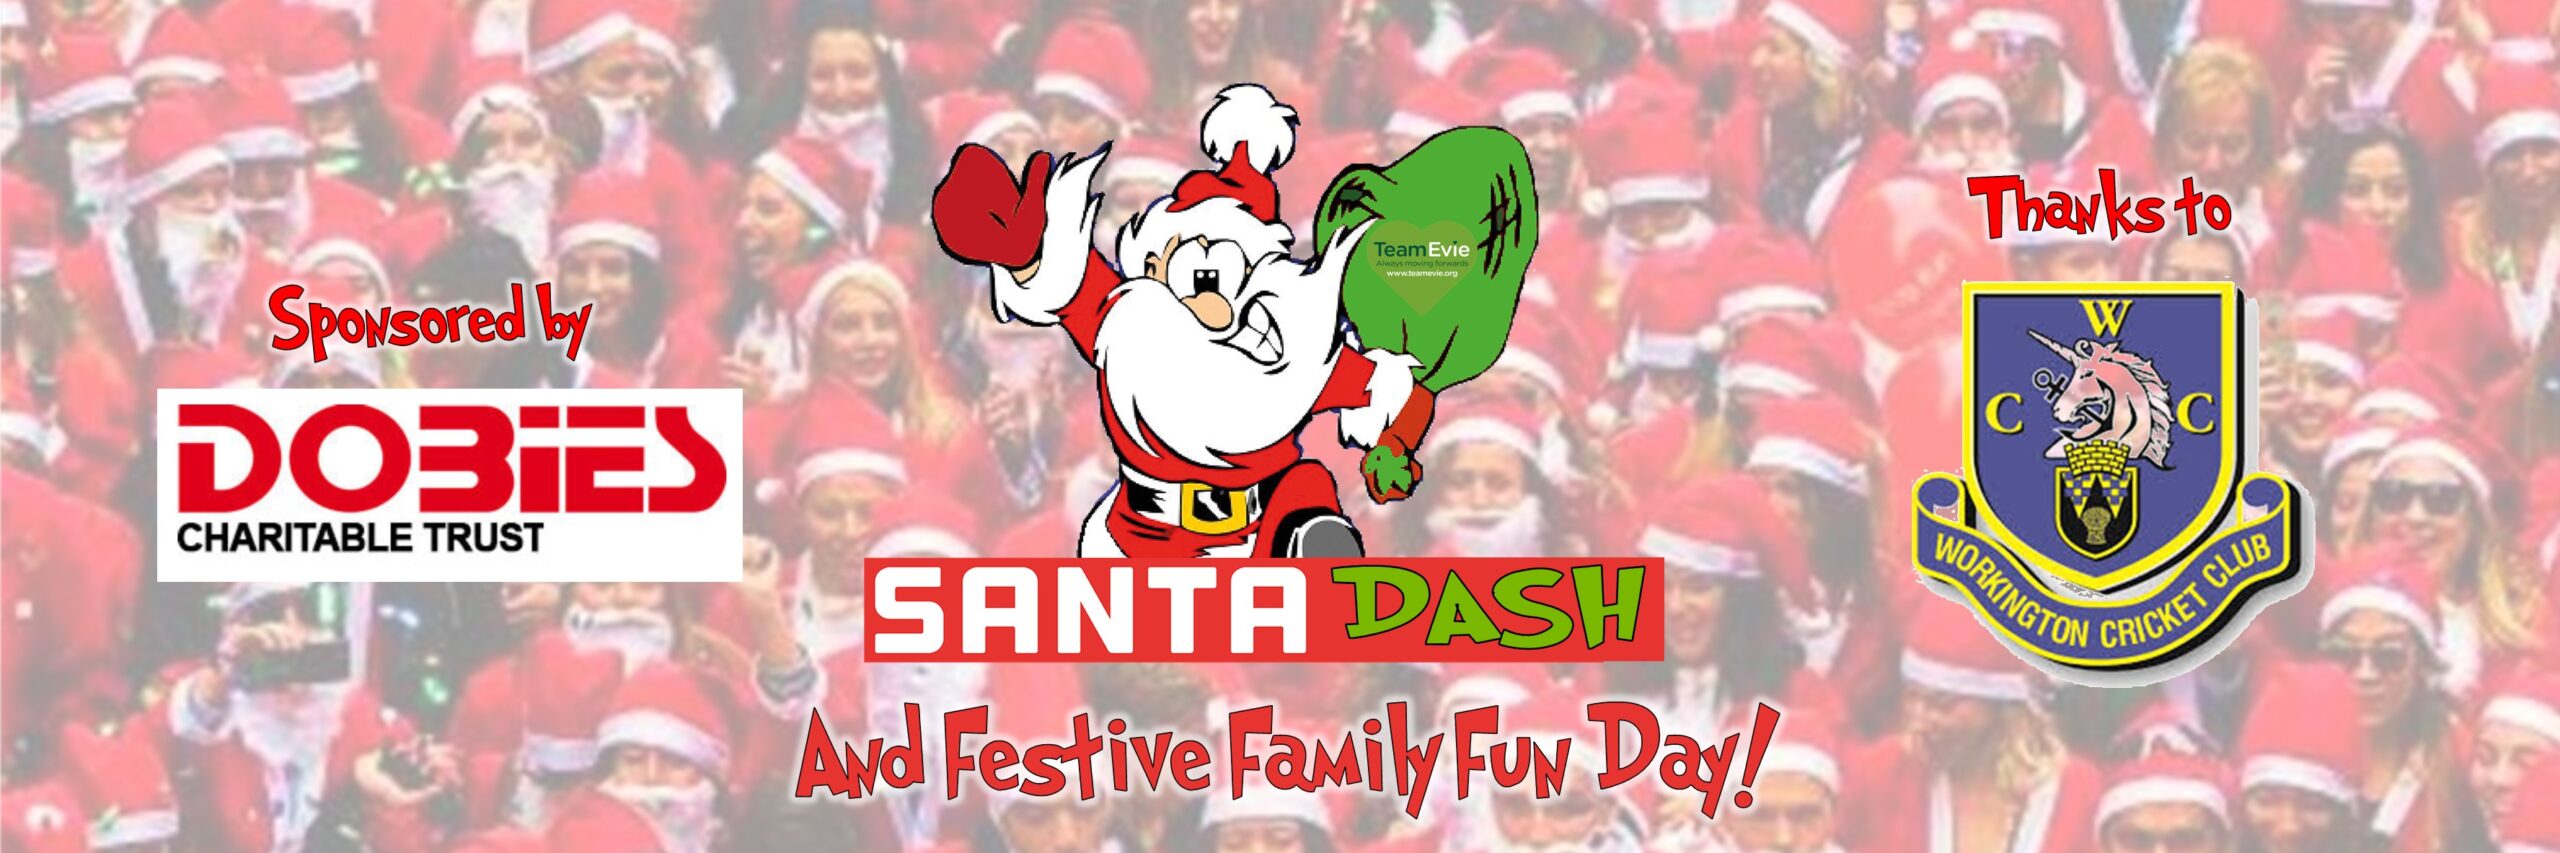 Santa Dash & Festive Family Fun Day Team Evie